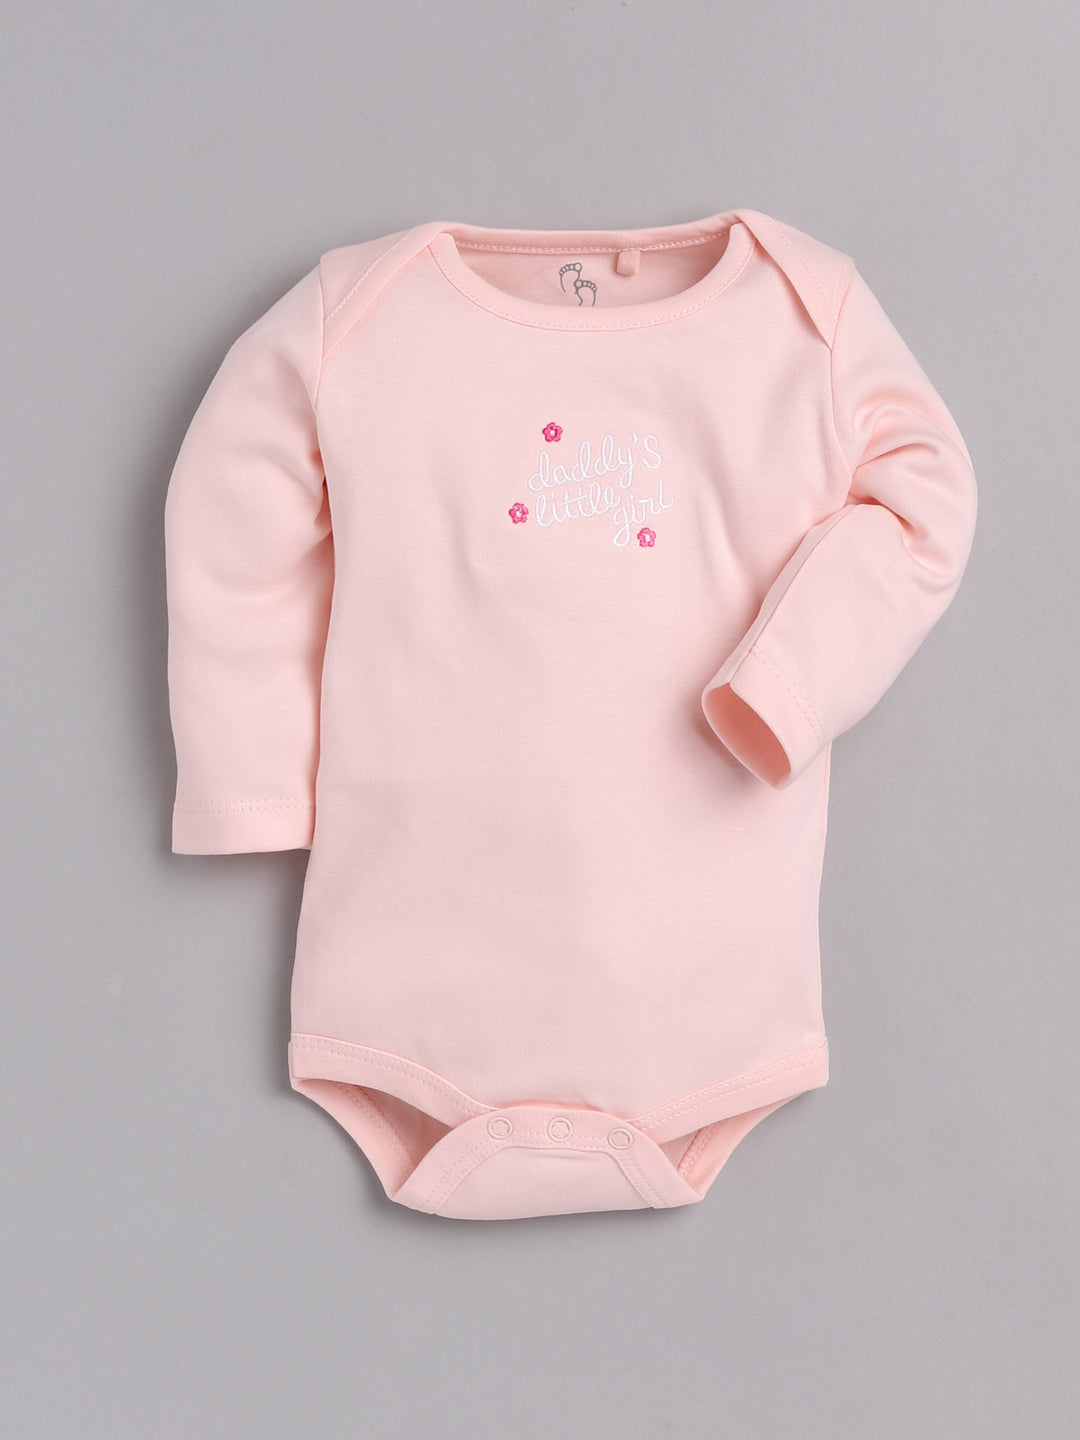 Girls Baby Romper for All Season/Sleep Suit/Comfort fit/ 100% Cotton (Set of 2)-FUSHIA